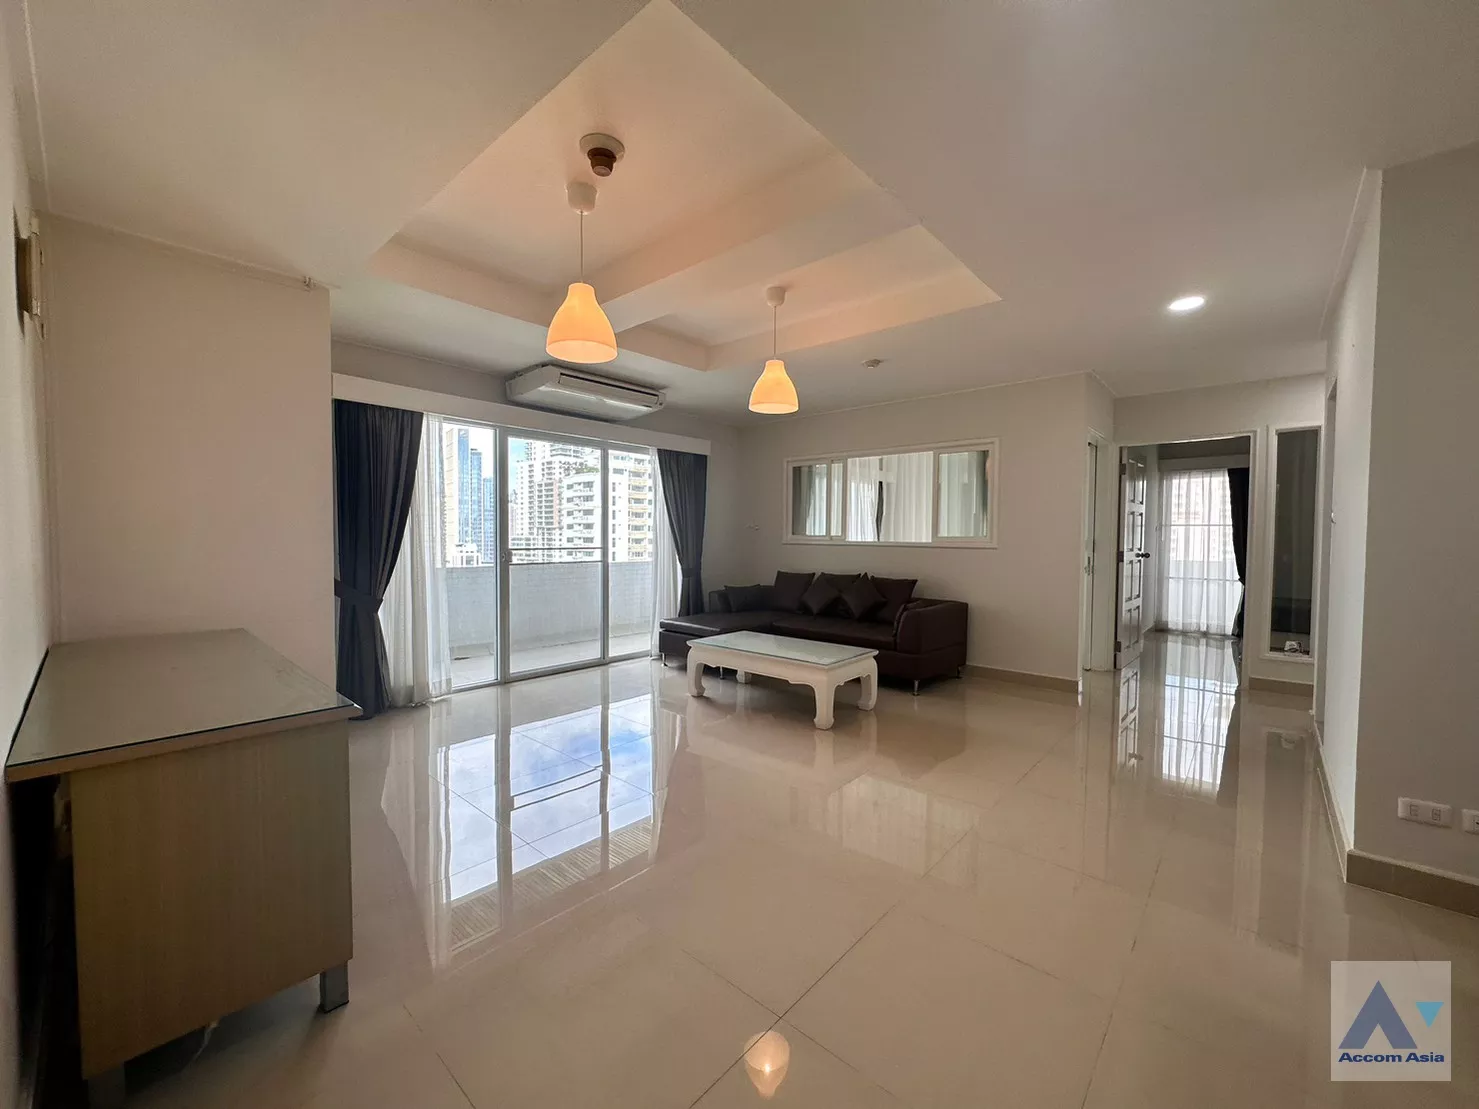  Richmond Palace Condominium  3 Bedroom for Rent BTS Phrom Phong in Sukhumvit Bangkok